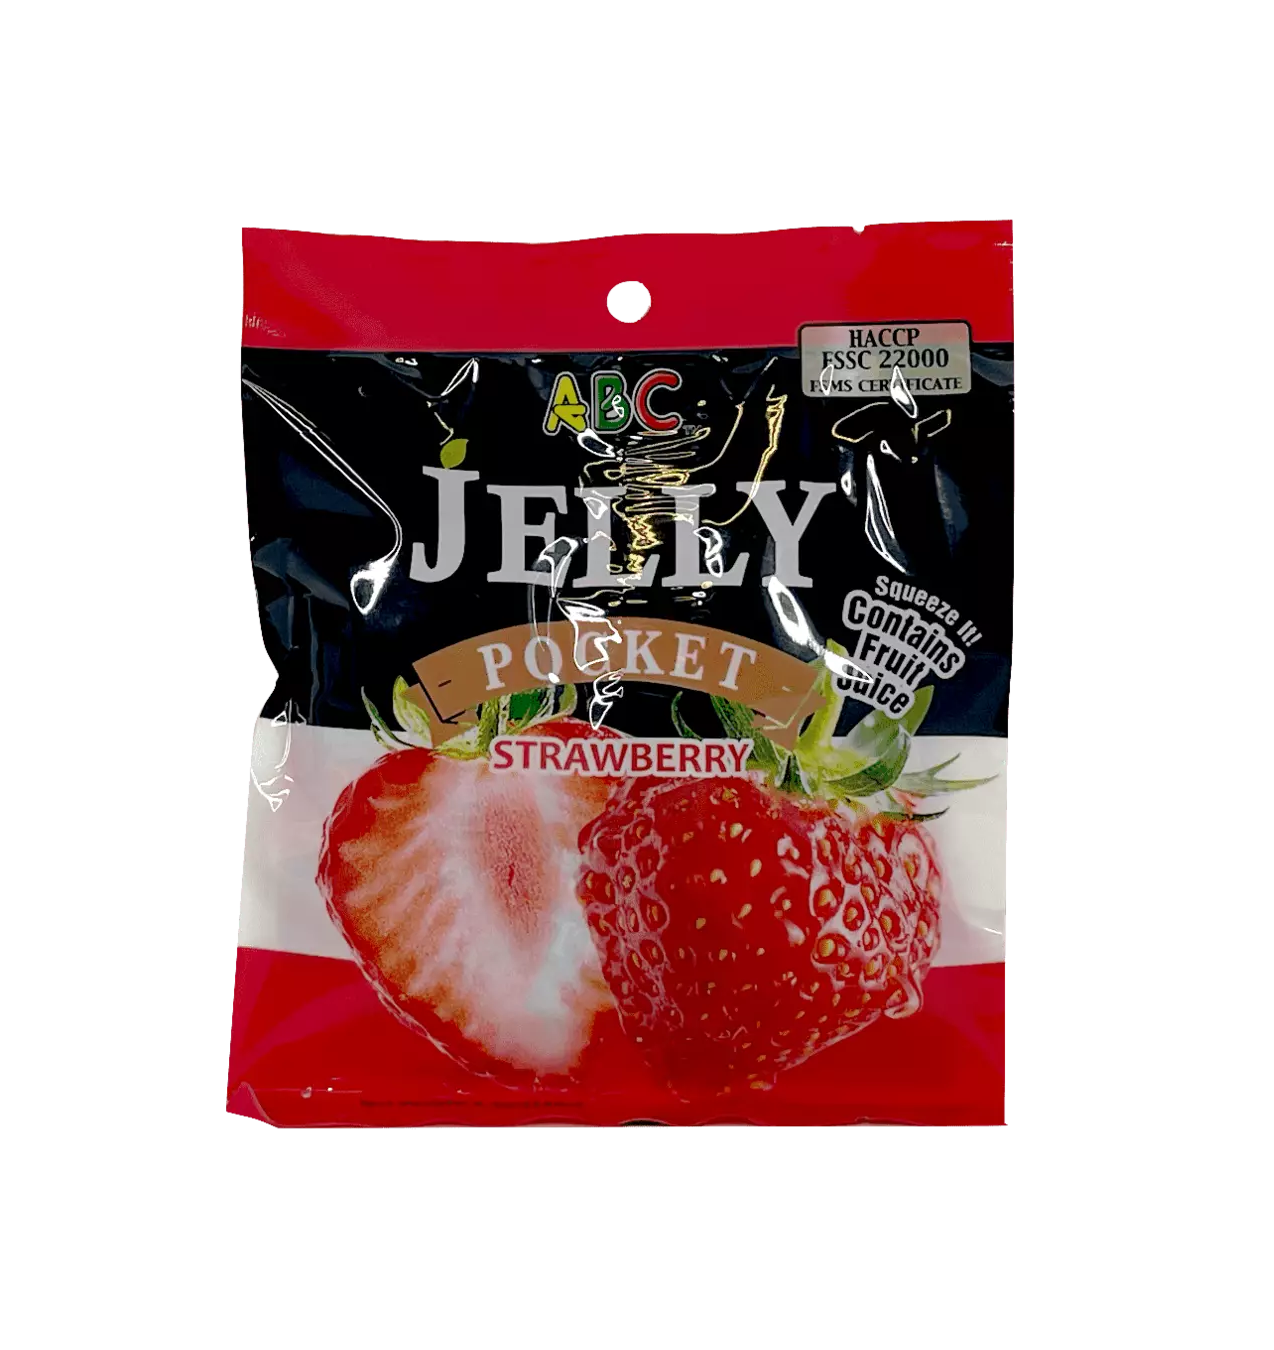 Jelly Pocket Strawberries 120g ABC Taiwan